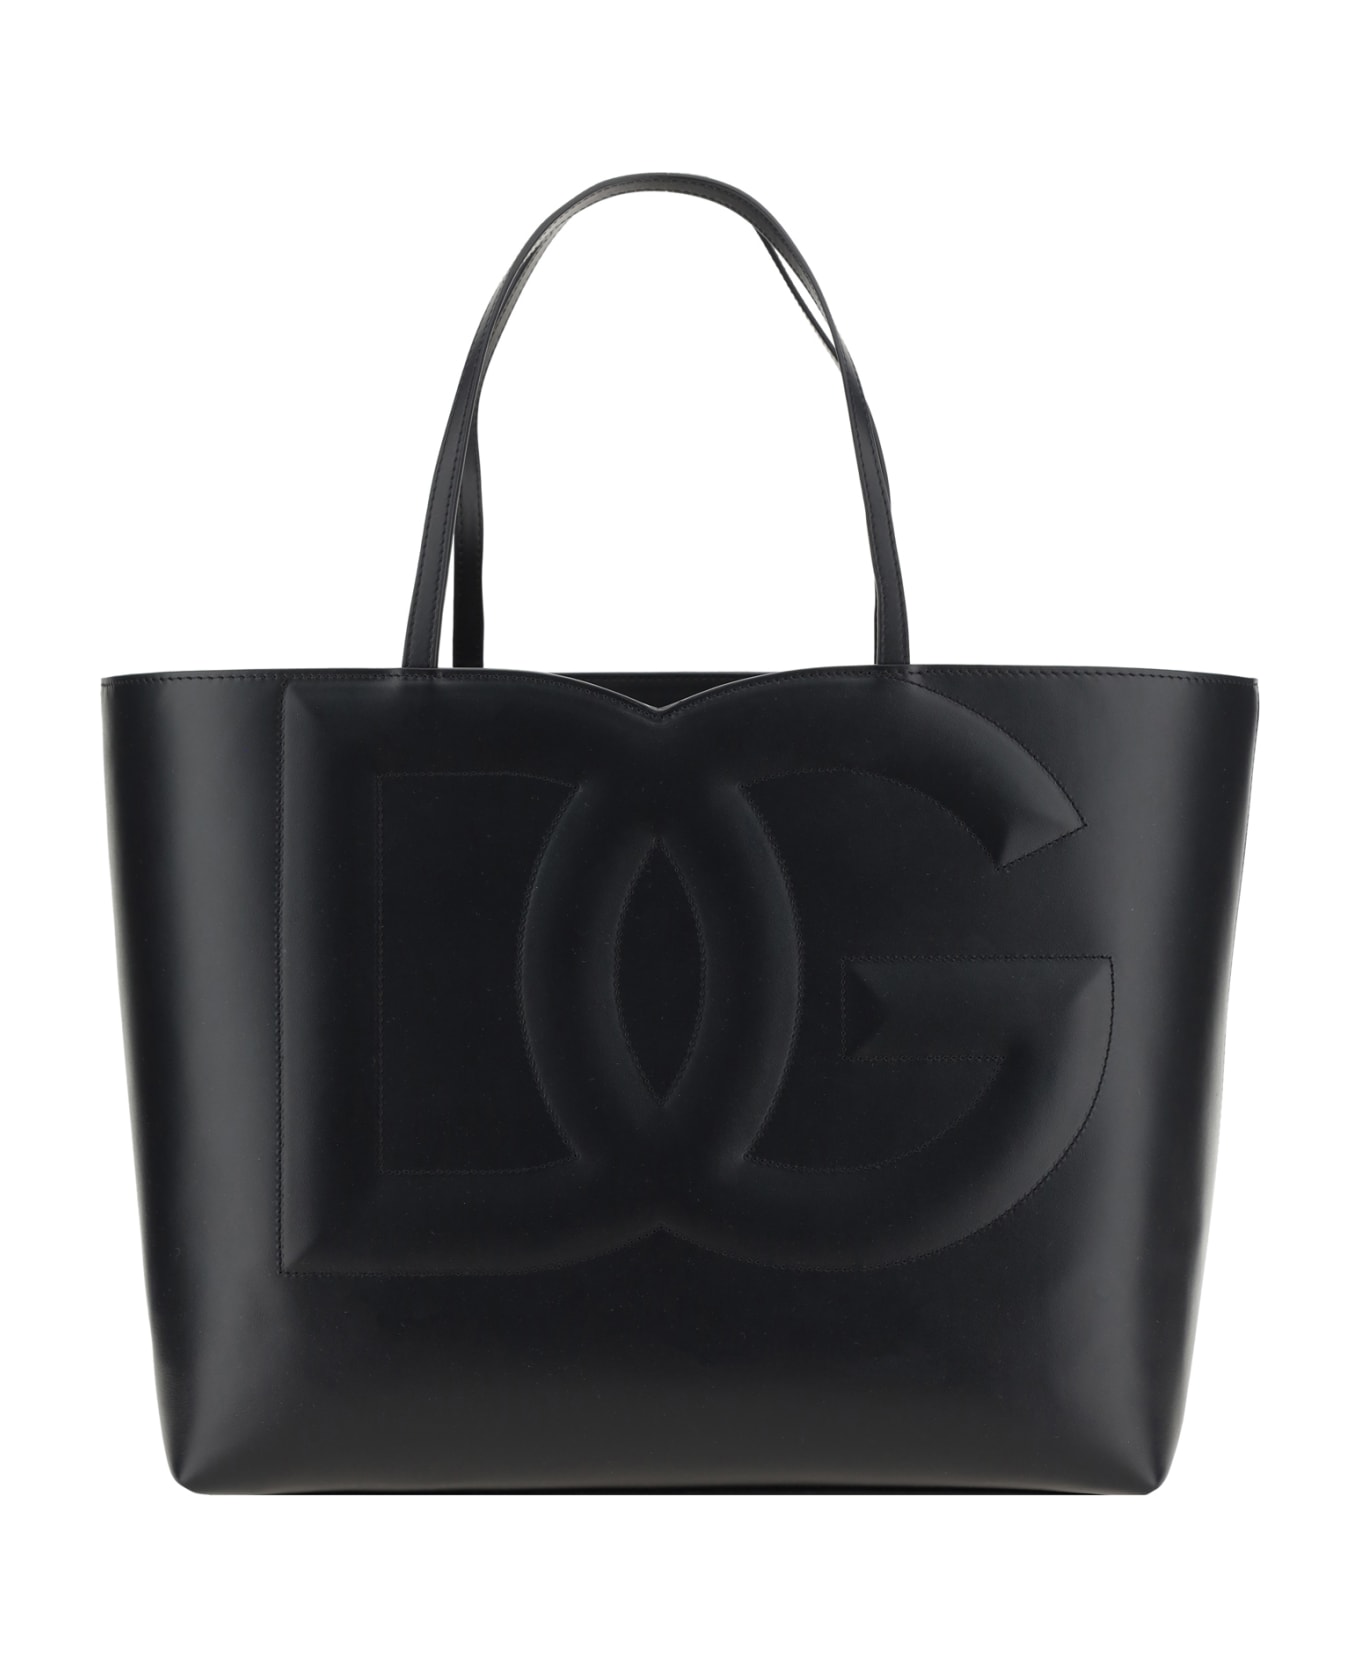 Dolce & Gabbana Shopping Bag - Black